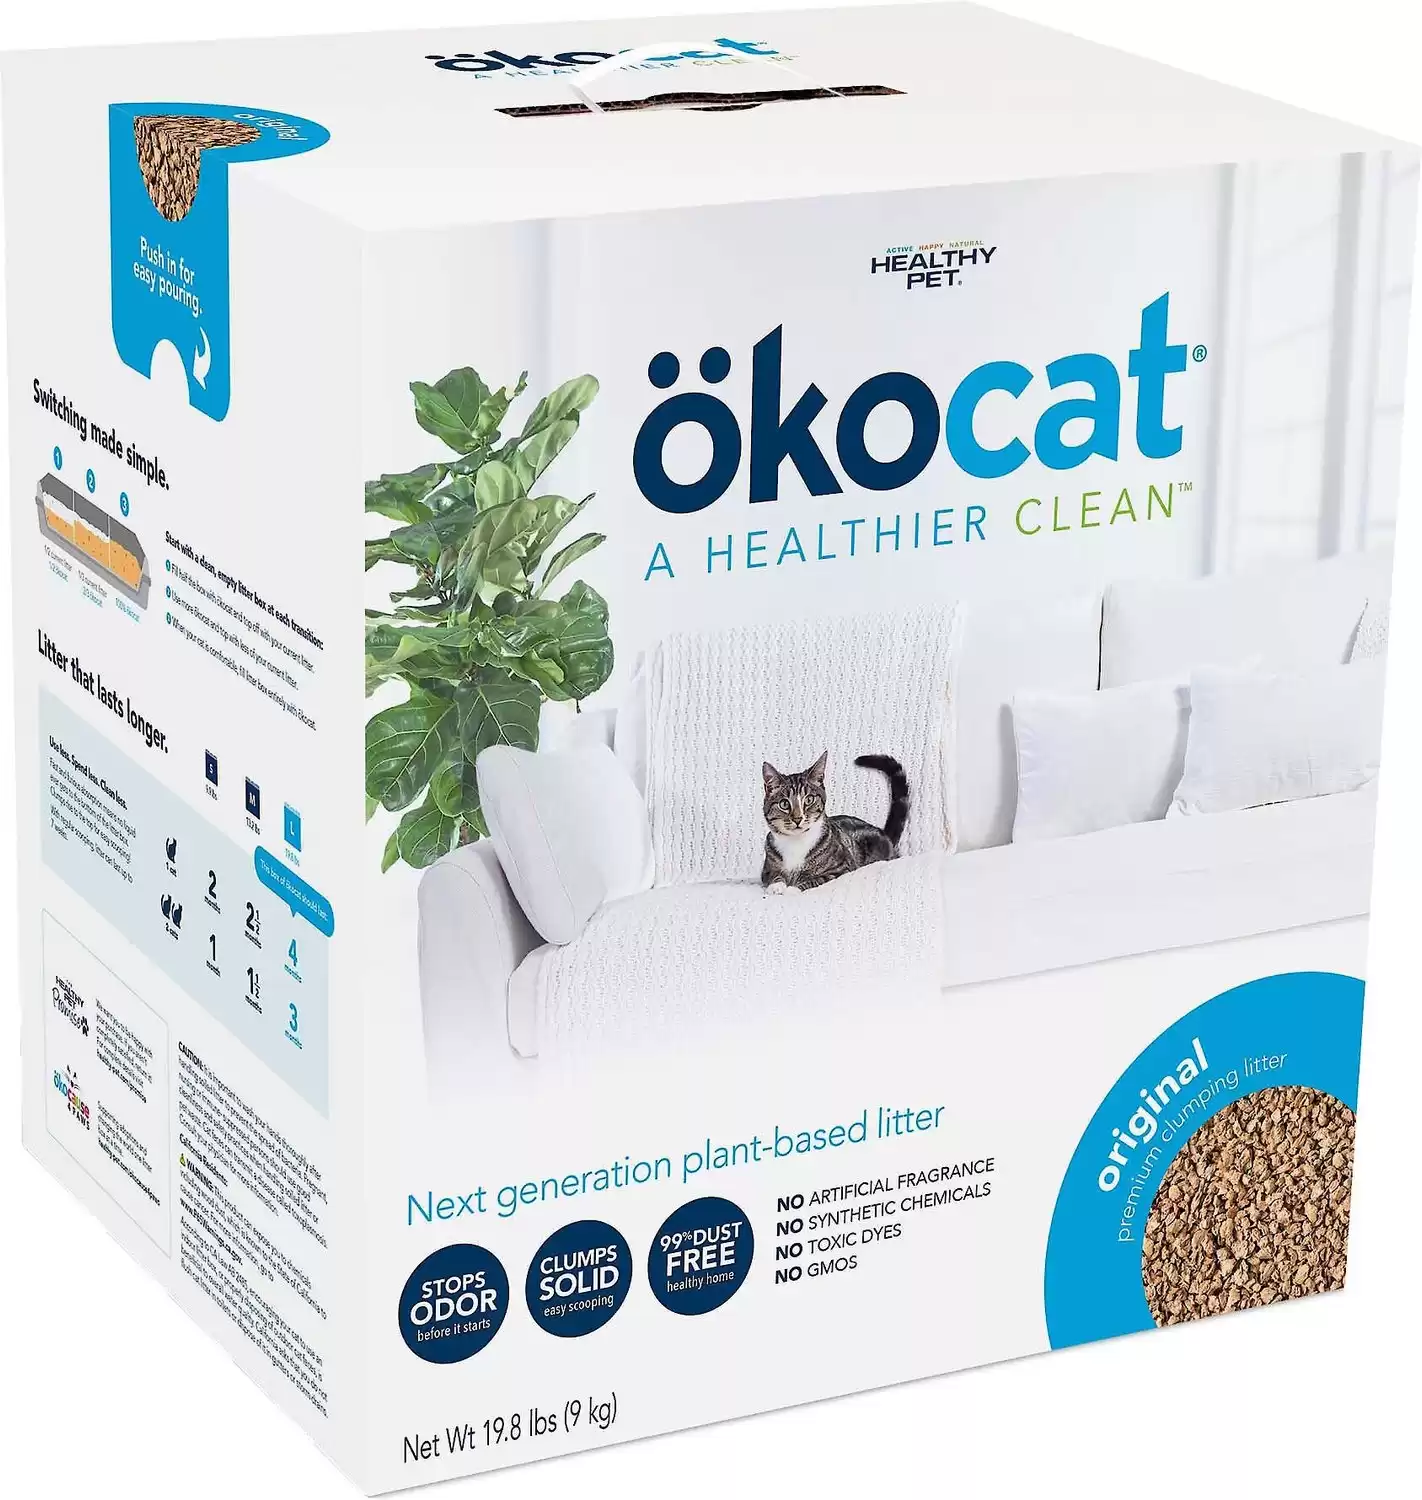 Okocat Original Cat Litter